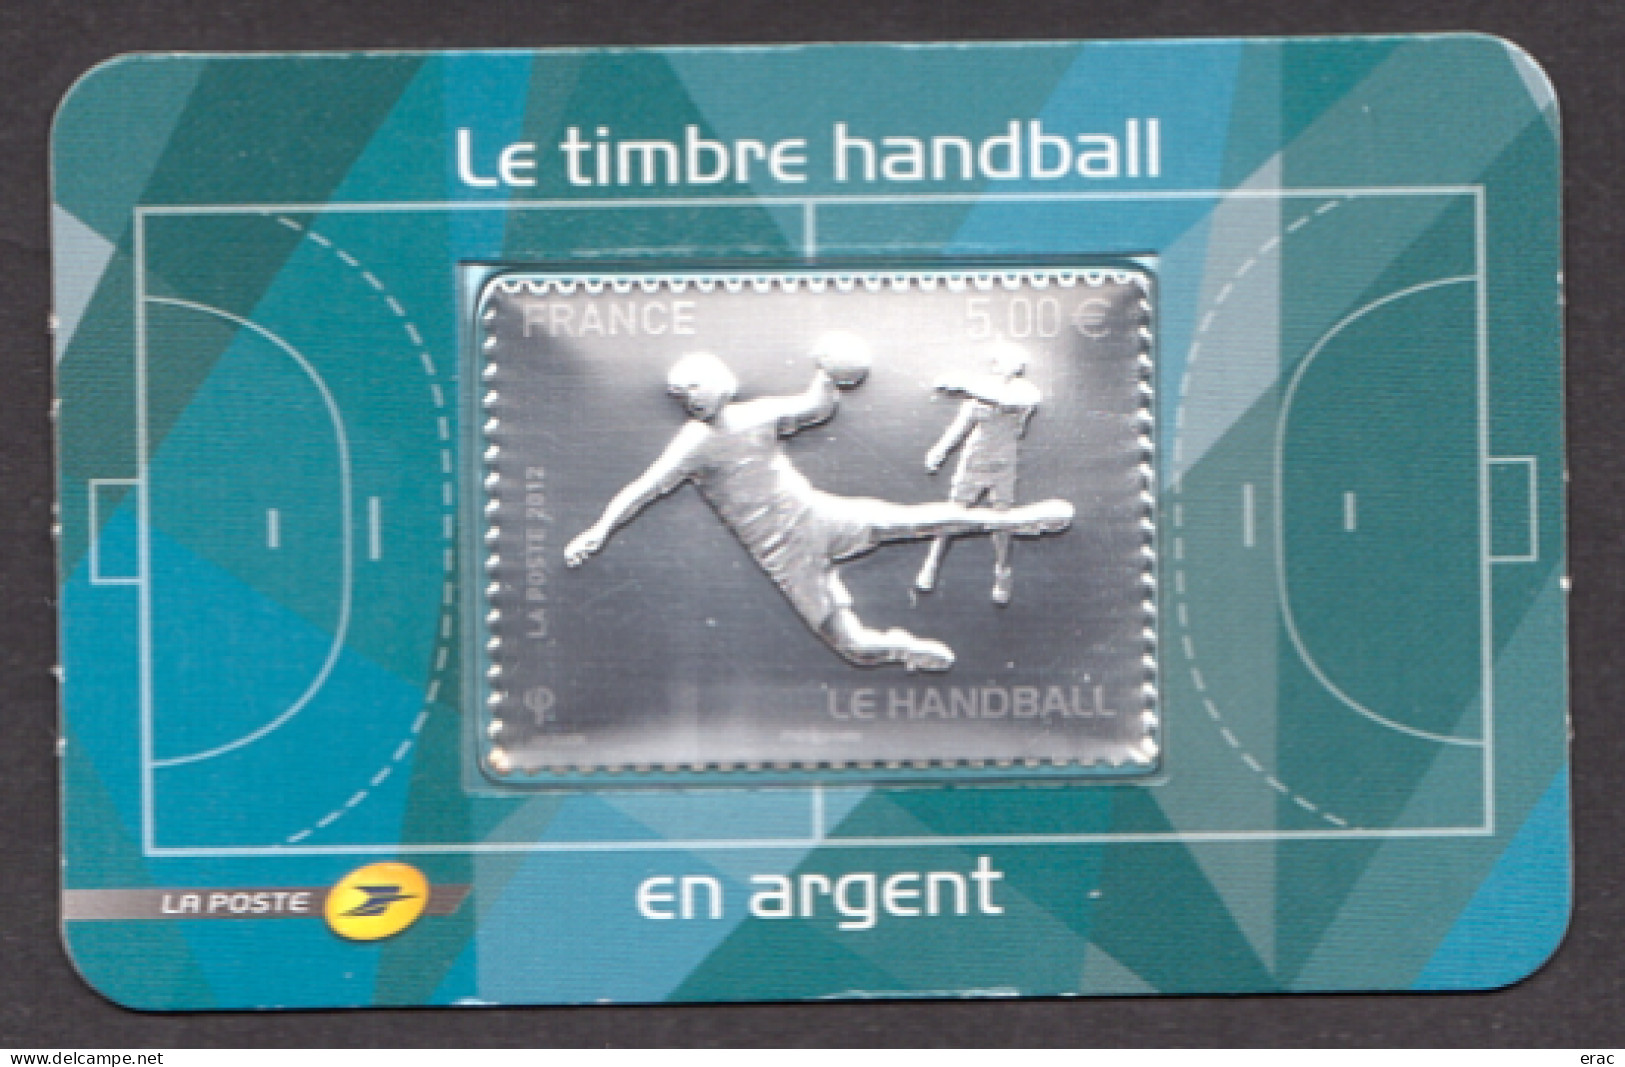 France - 2012 - Autoadhésif N° 738 - Neuf ** - Le Handball - Timbre Argent Sous Blister Cartonné - Neufs